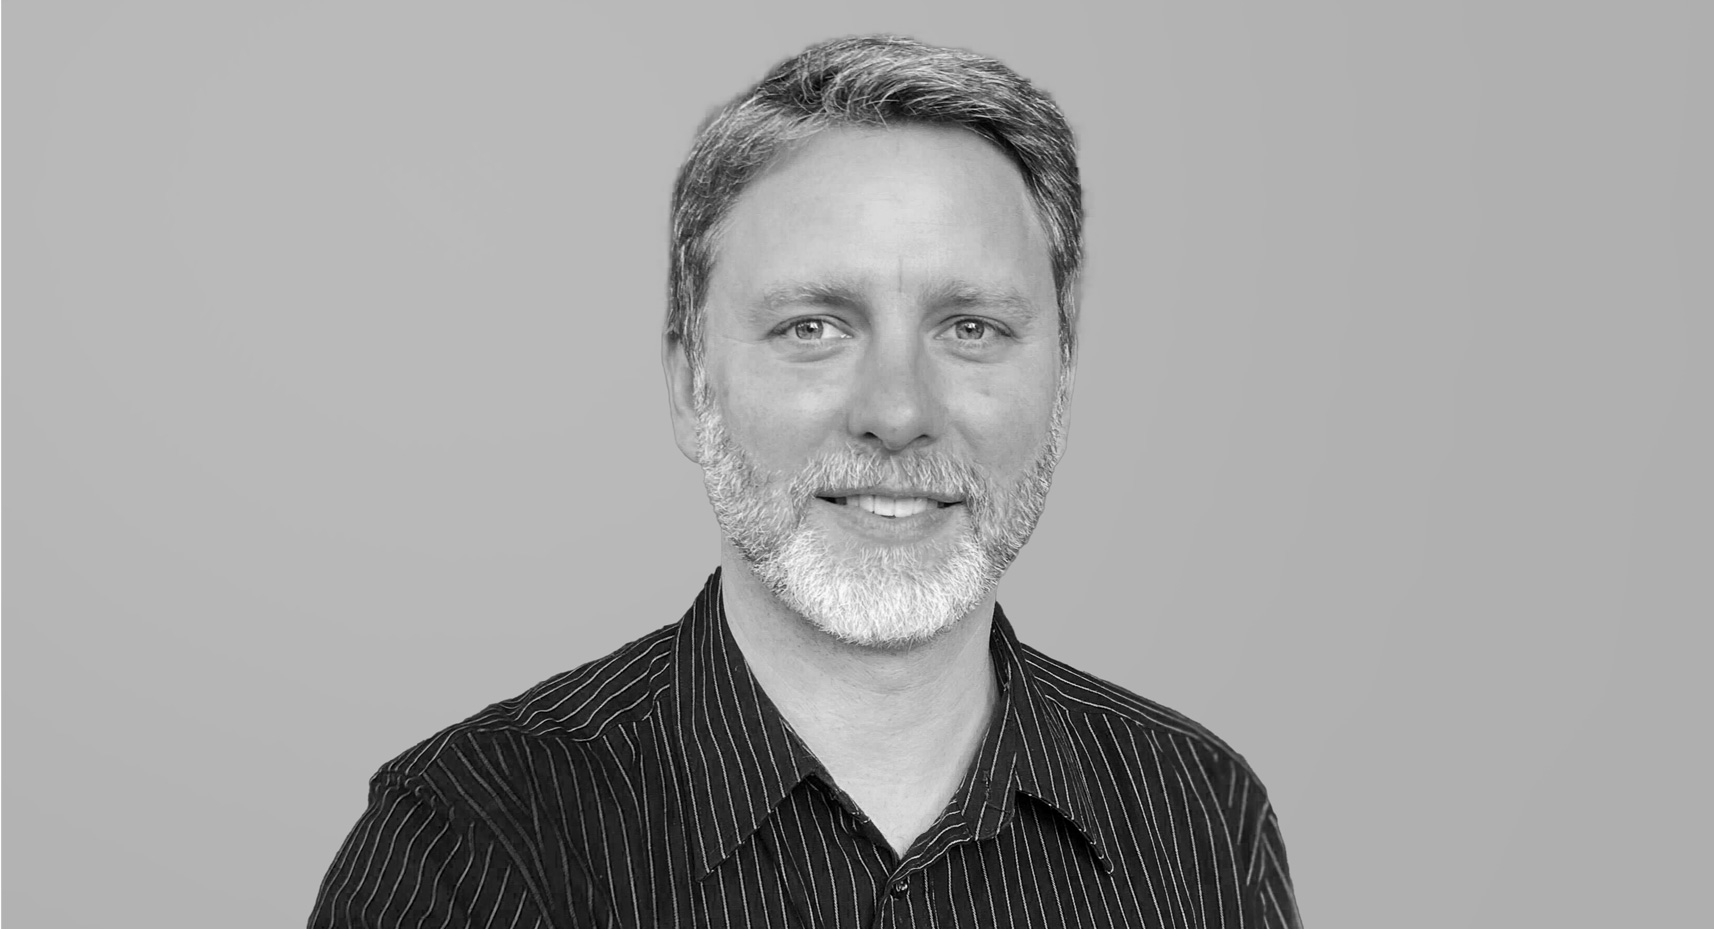 Meet Bjorn Myhre – Partnership Director, USA